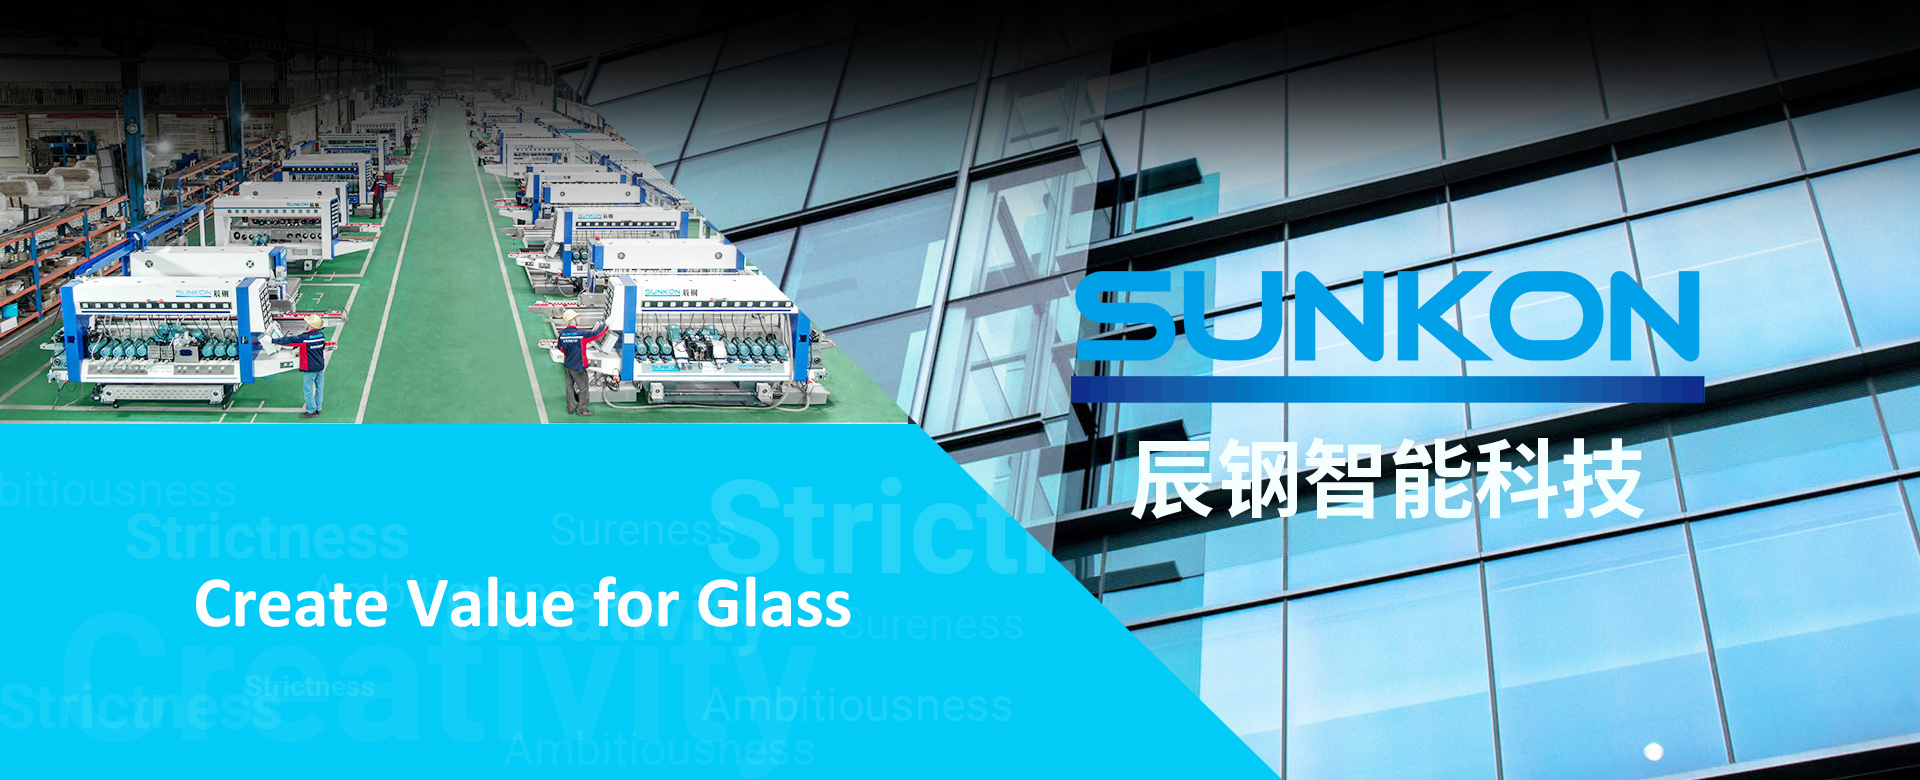 Màquina de vidre SUNKON - pancarta